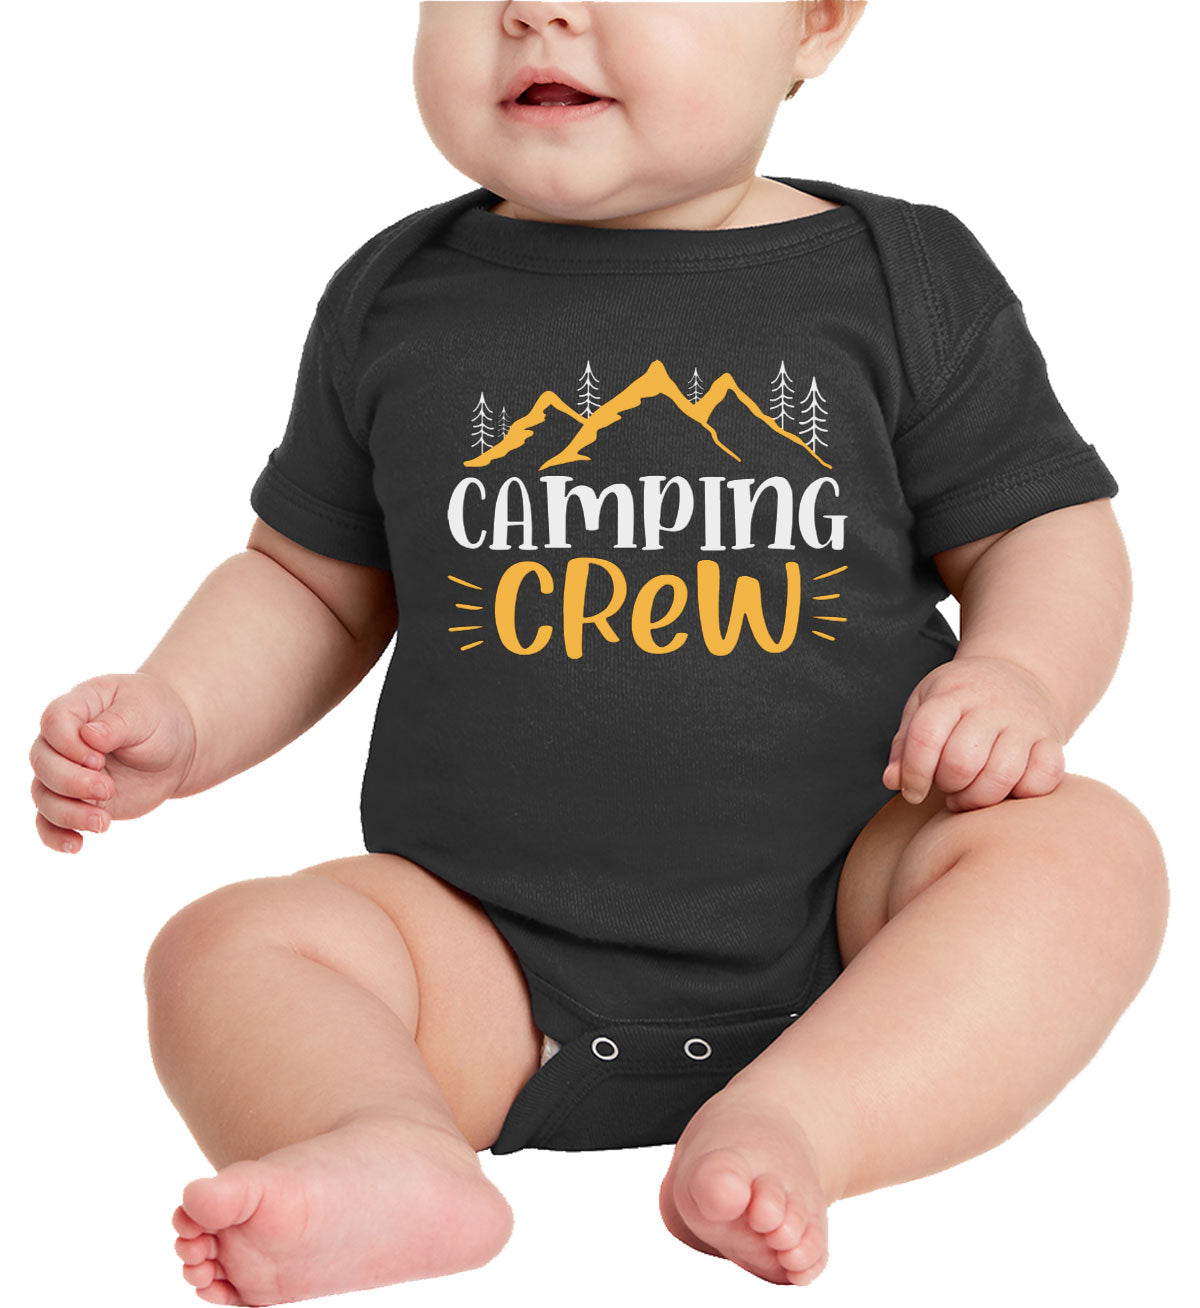 Camping Crew Baby Onesie